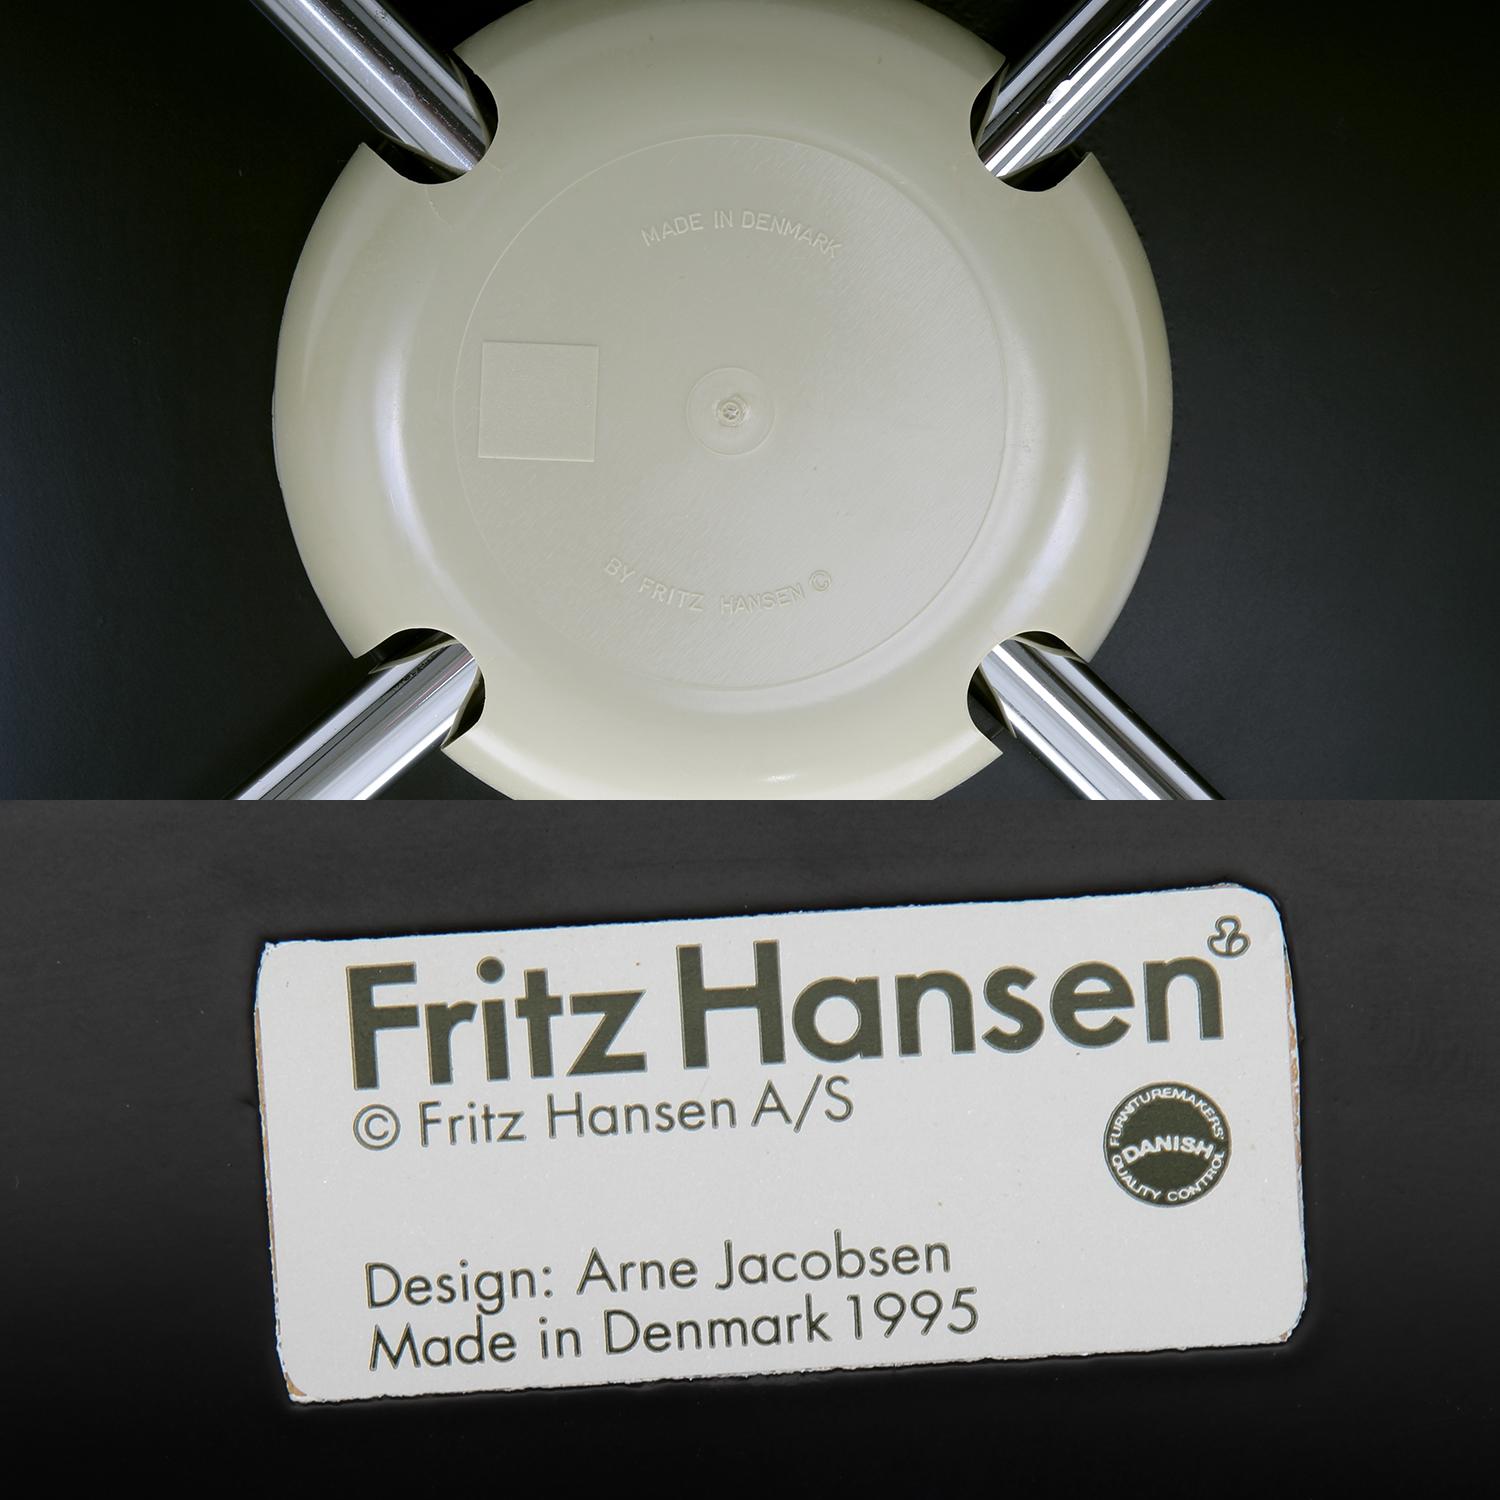 Steel Series 7 Black Chair by Arne Jacobsen for Fritz Hansen in 1955